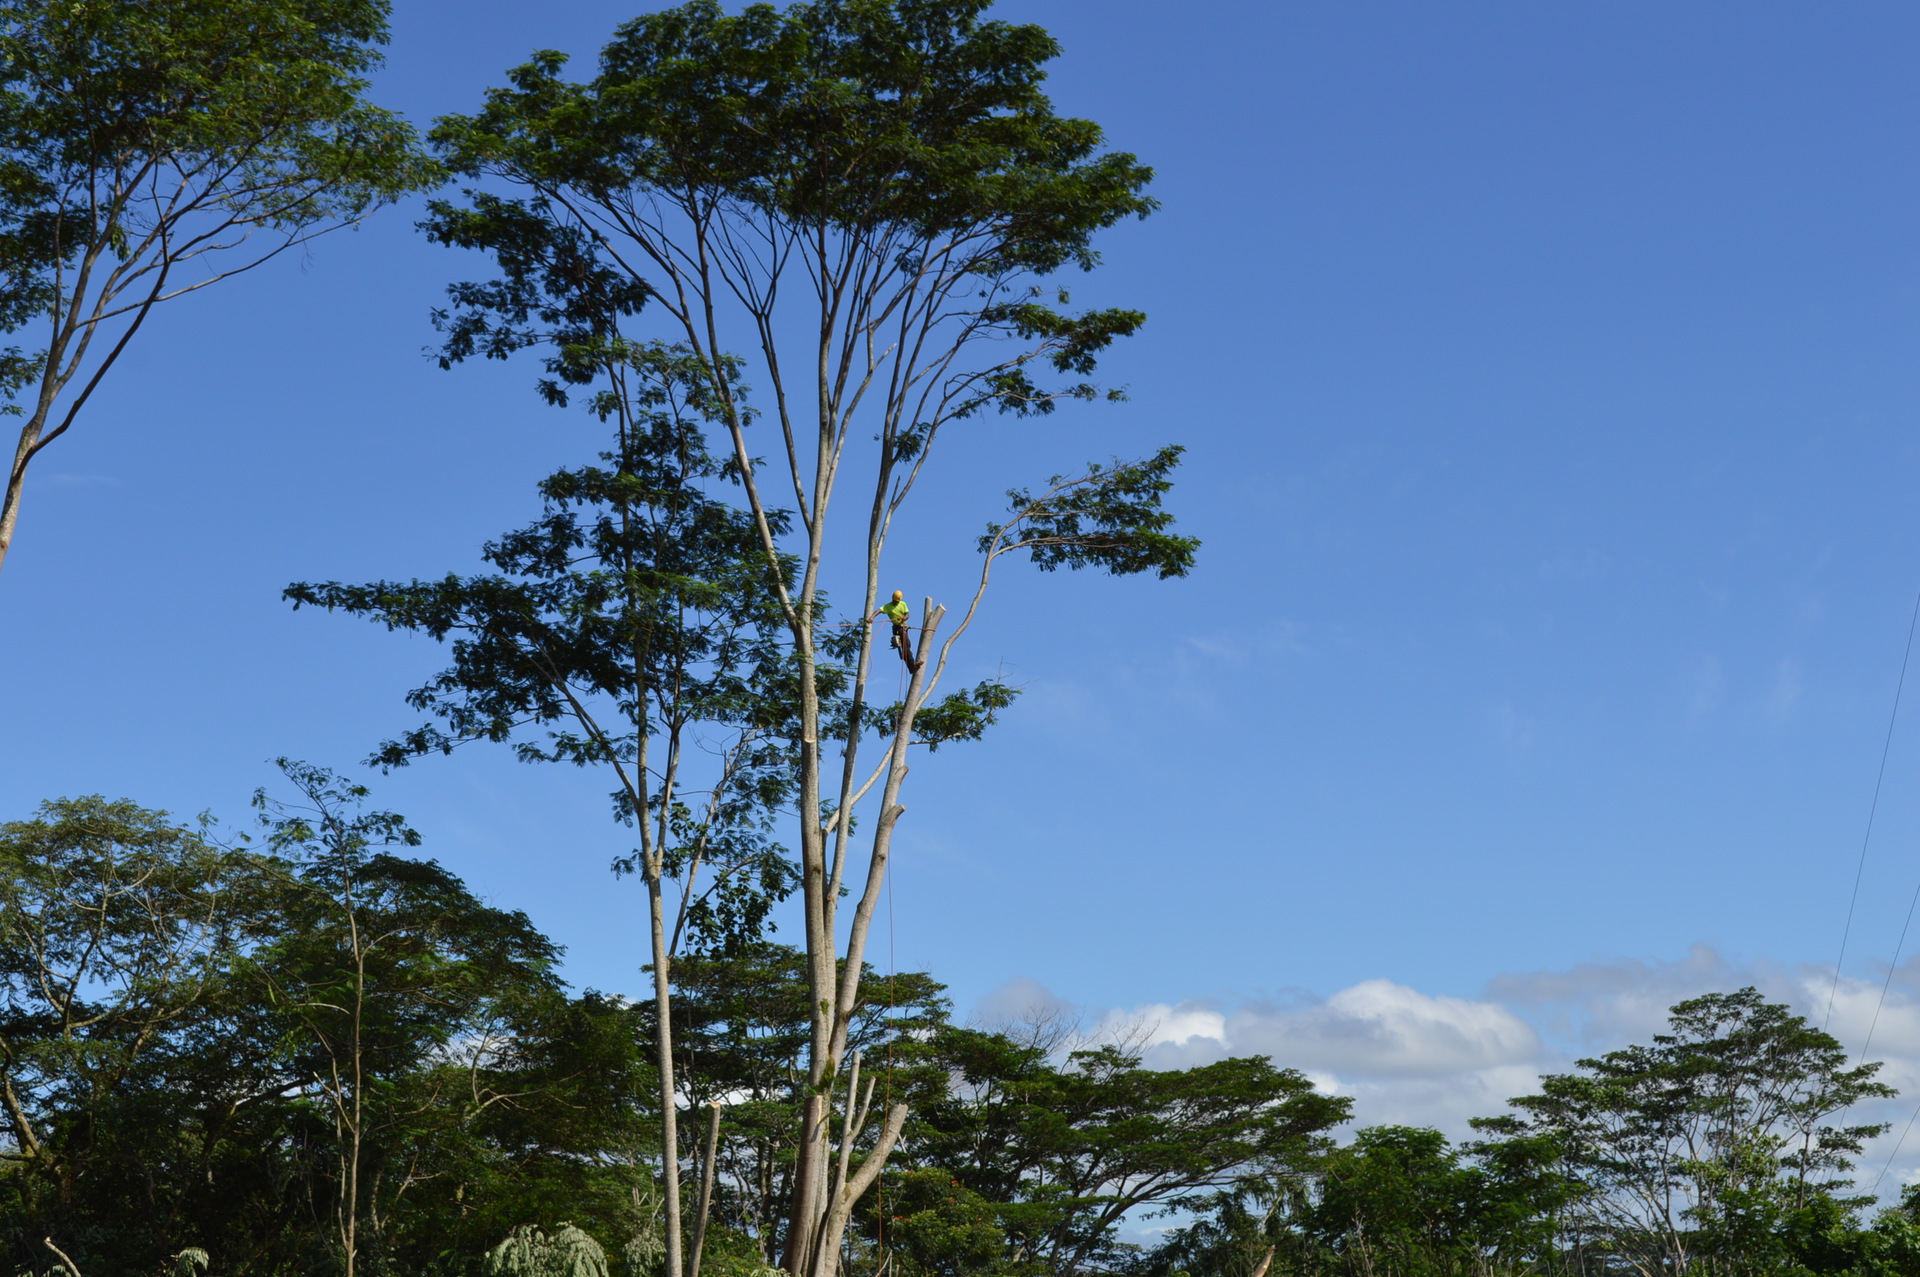 Big Island Tree Service, Inc. Photo